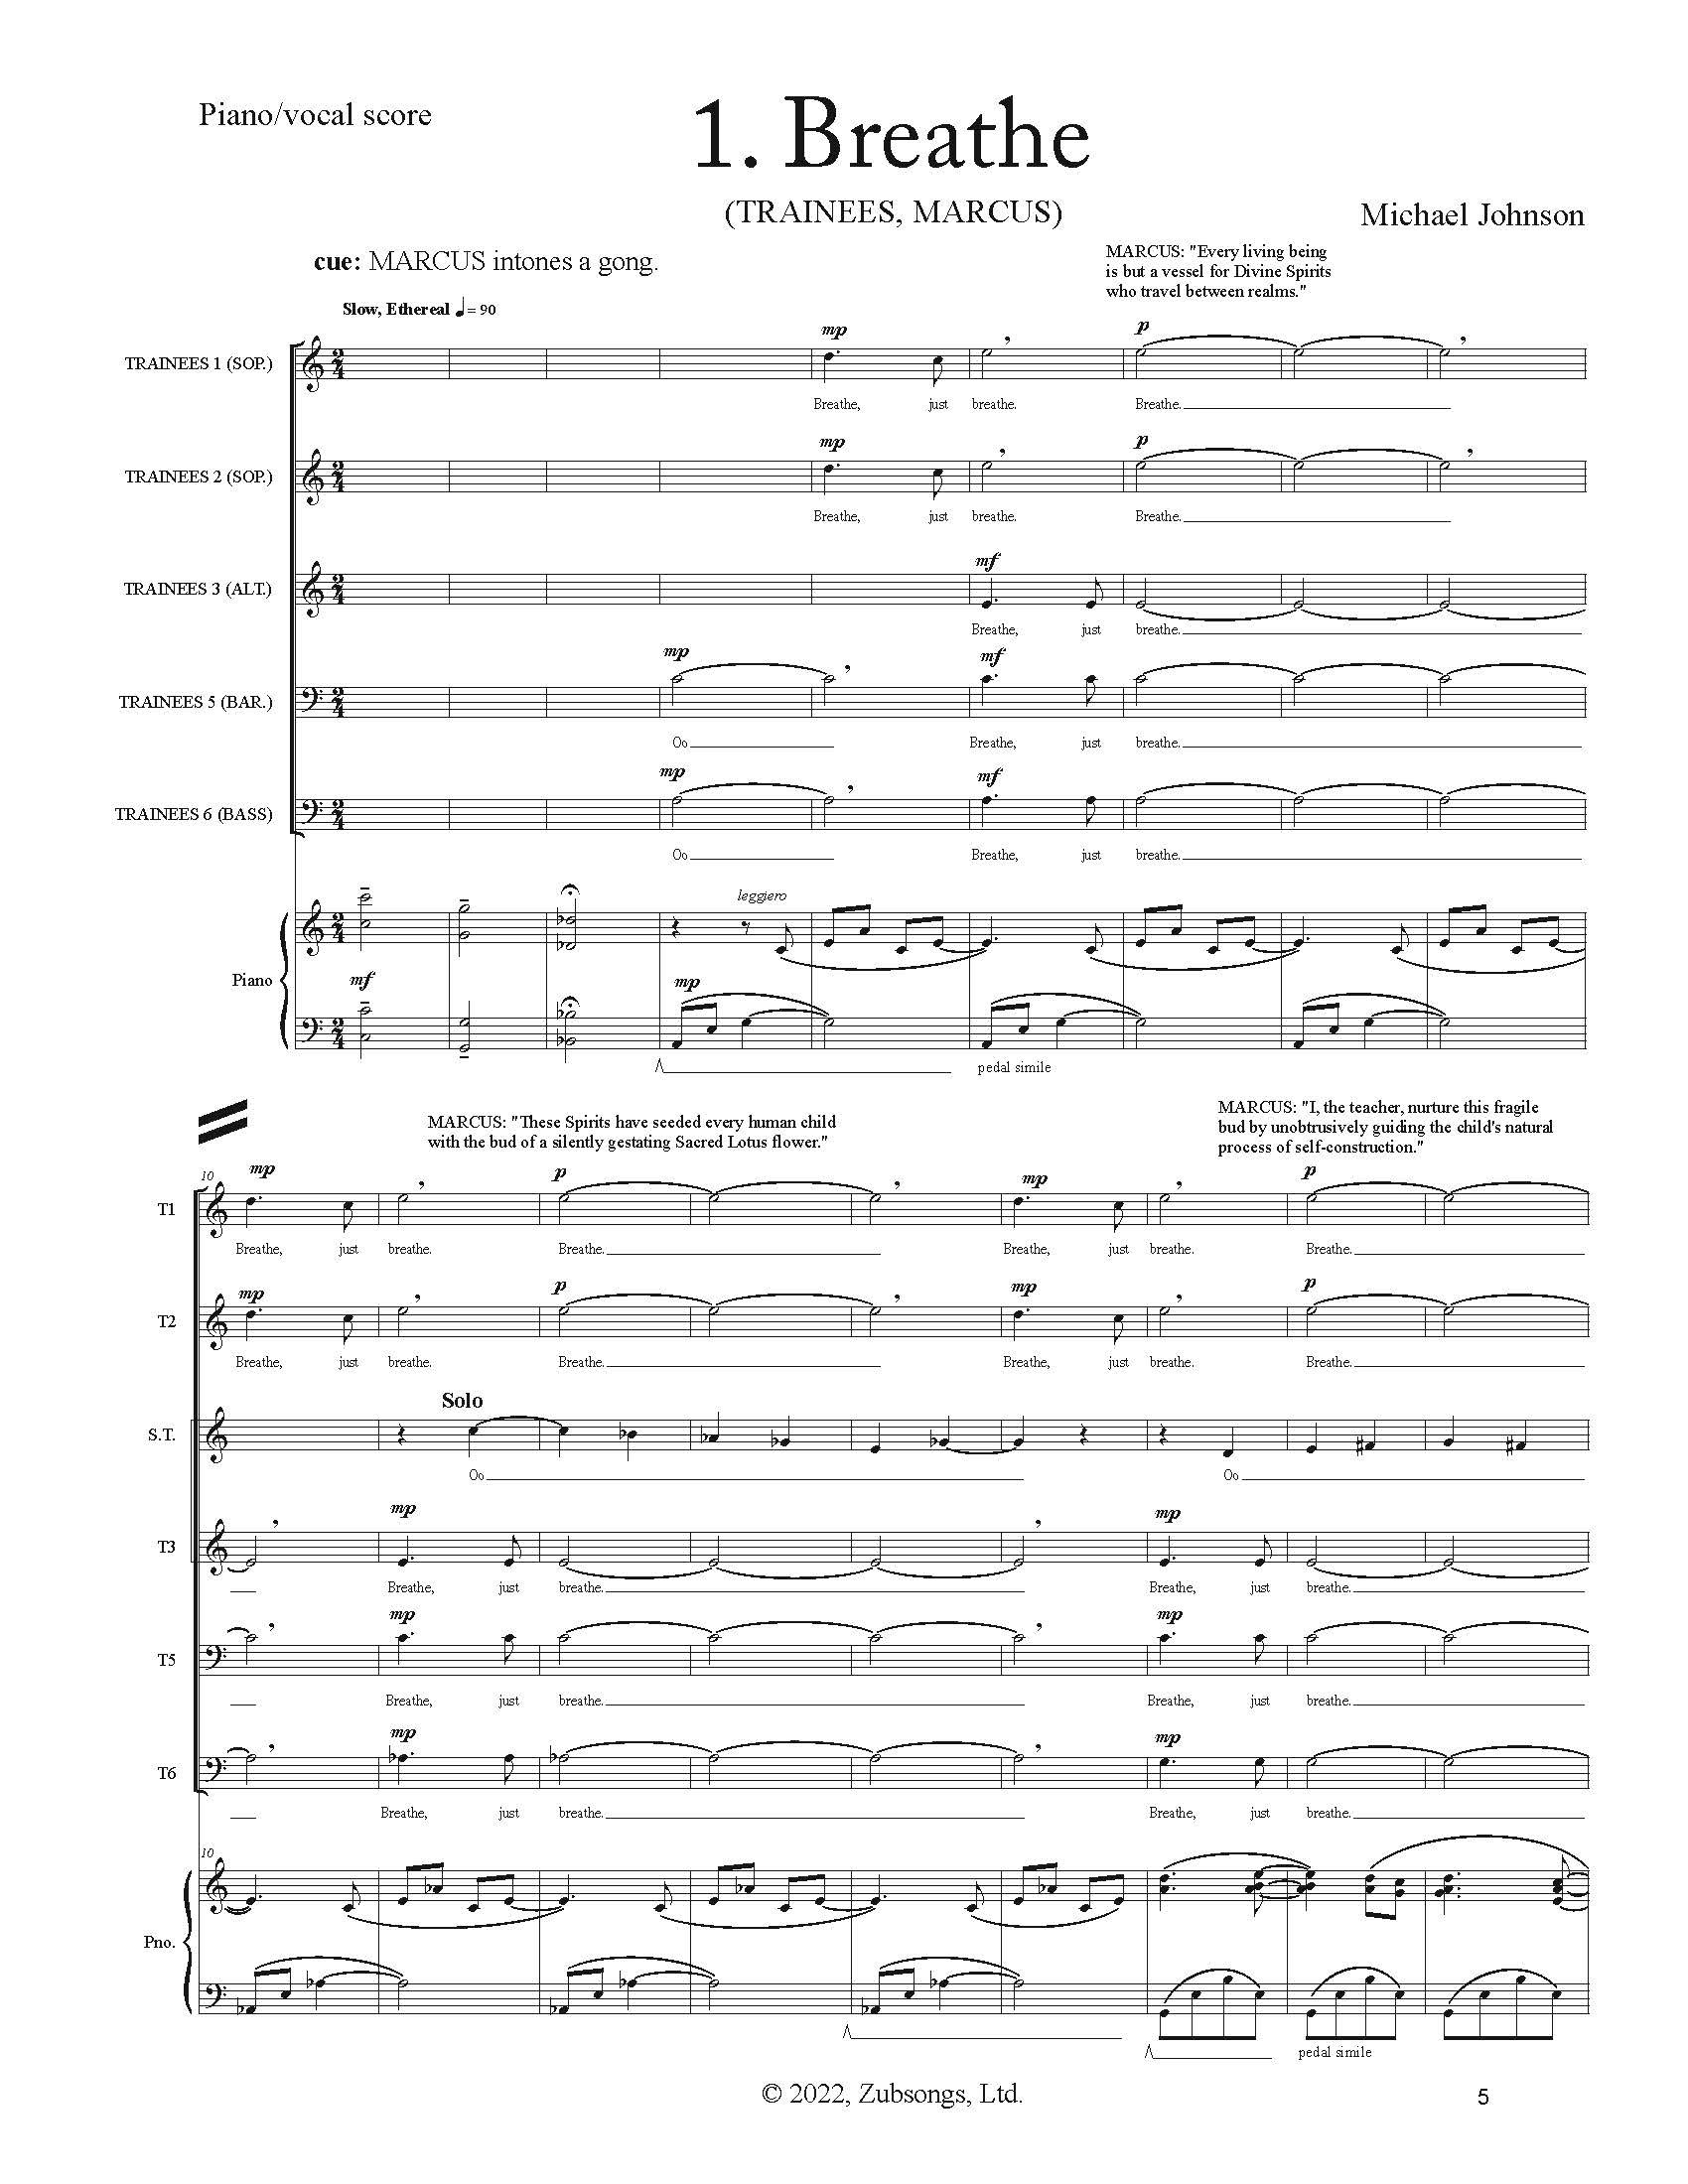 FULL PIANO VOCAL SCORE DRAFT 1 - Score_Page_005.jpg